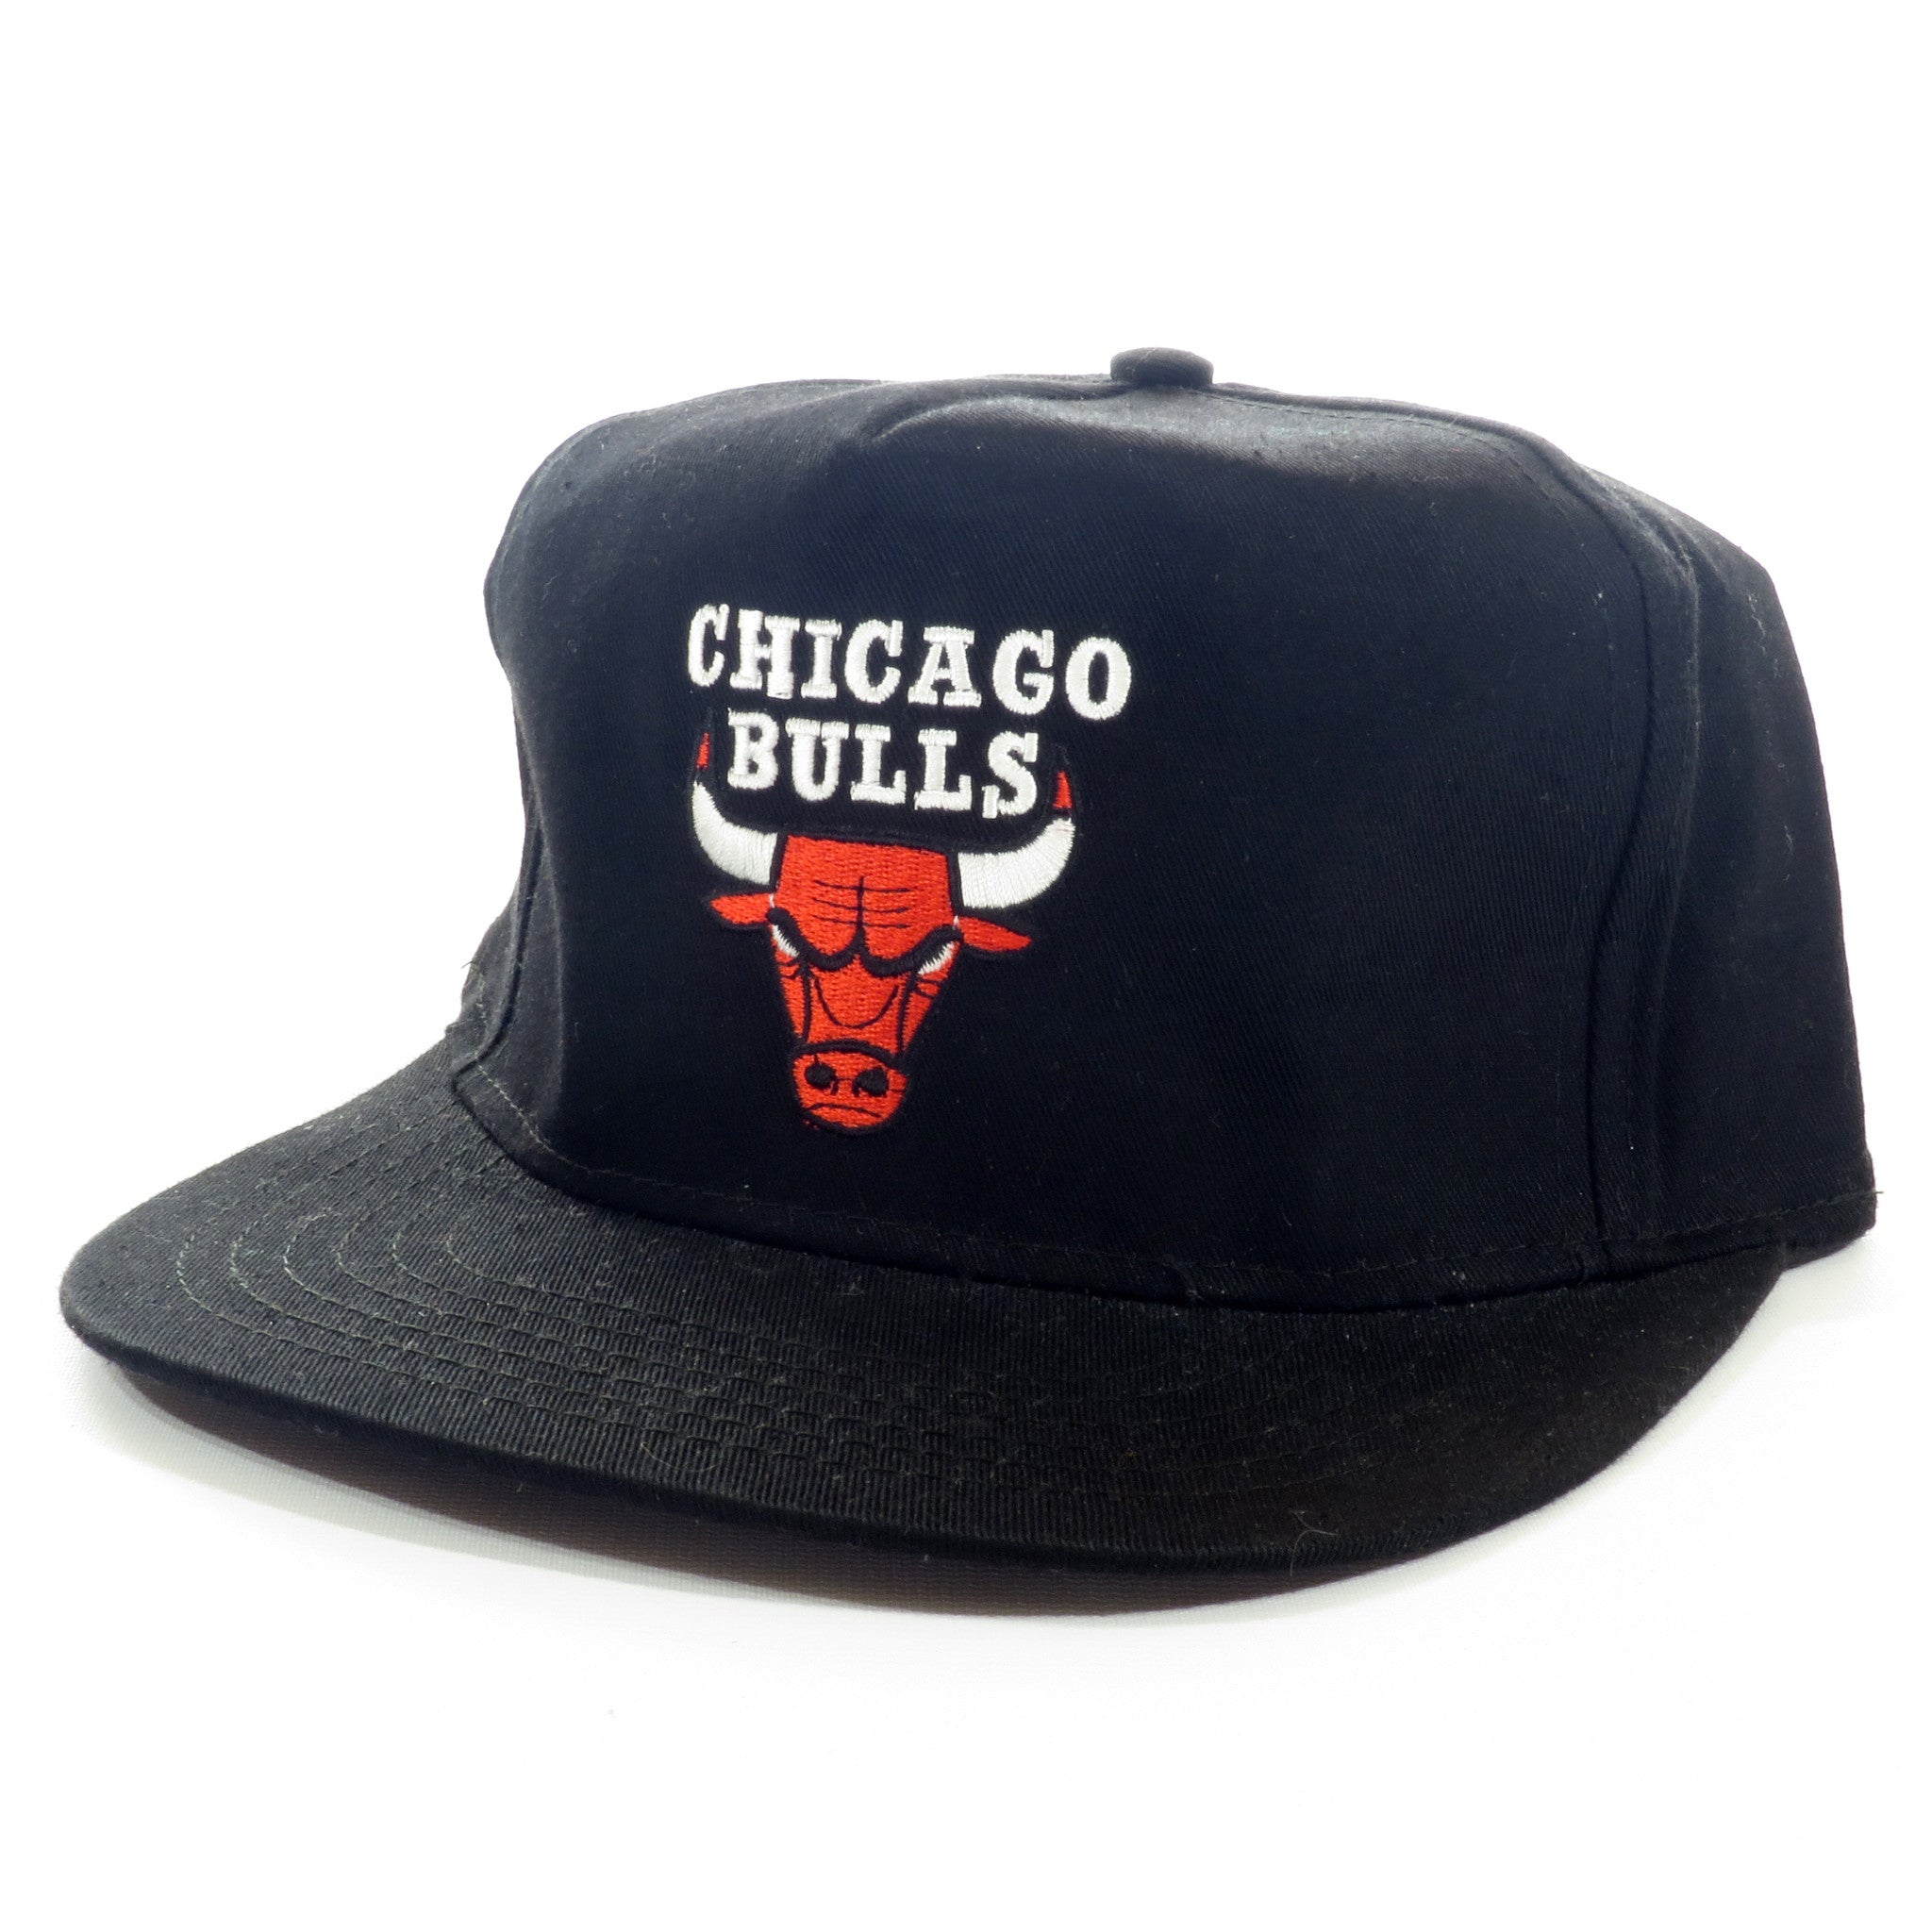 Chicago Bulls Adidas Snapback Hat